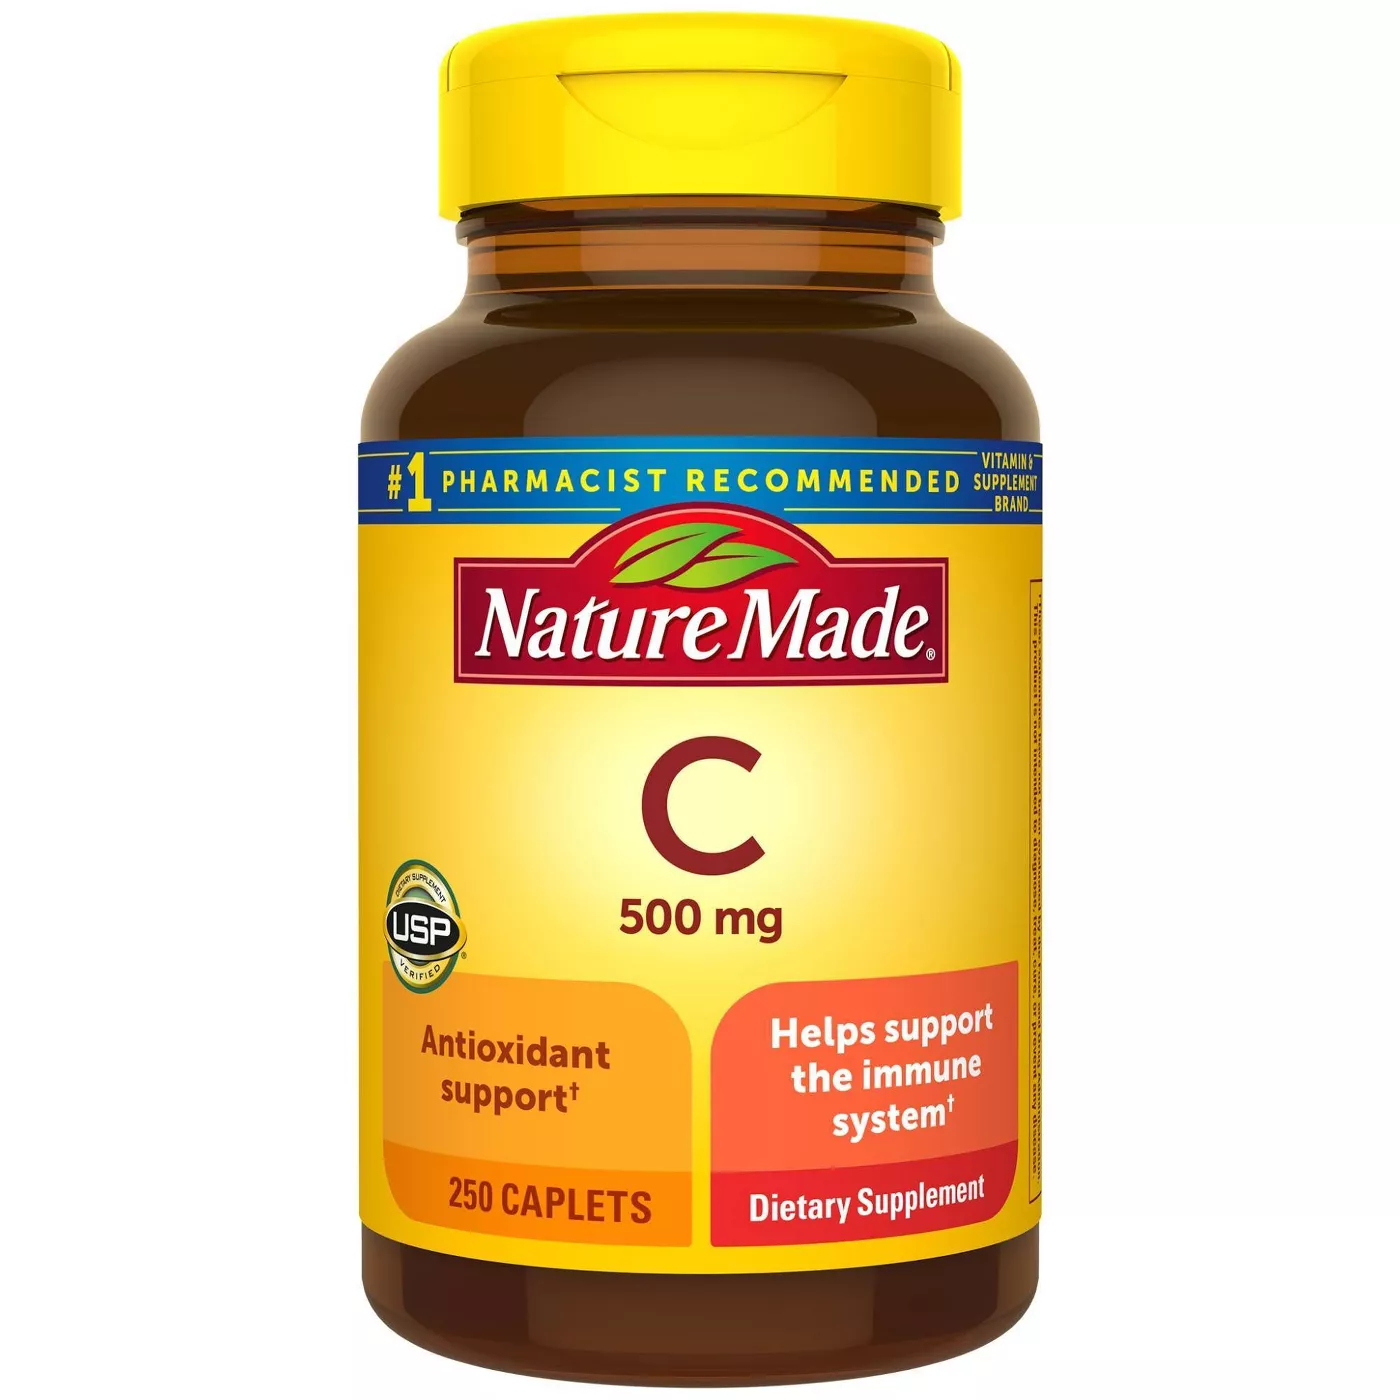 Nature Made Vitamin C 500 mg Caplets - 250ct - image 1 of 6